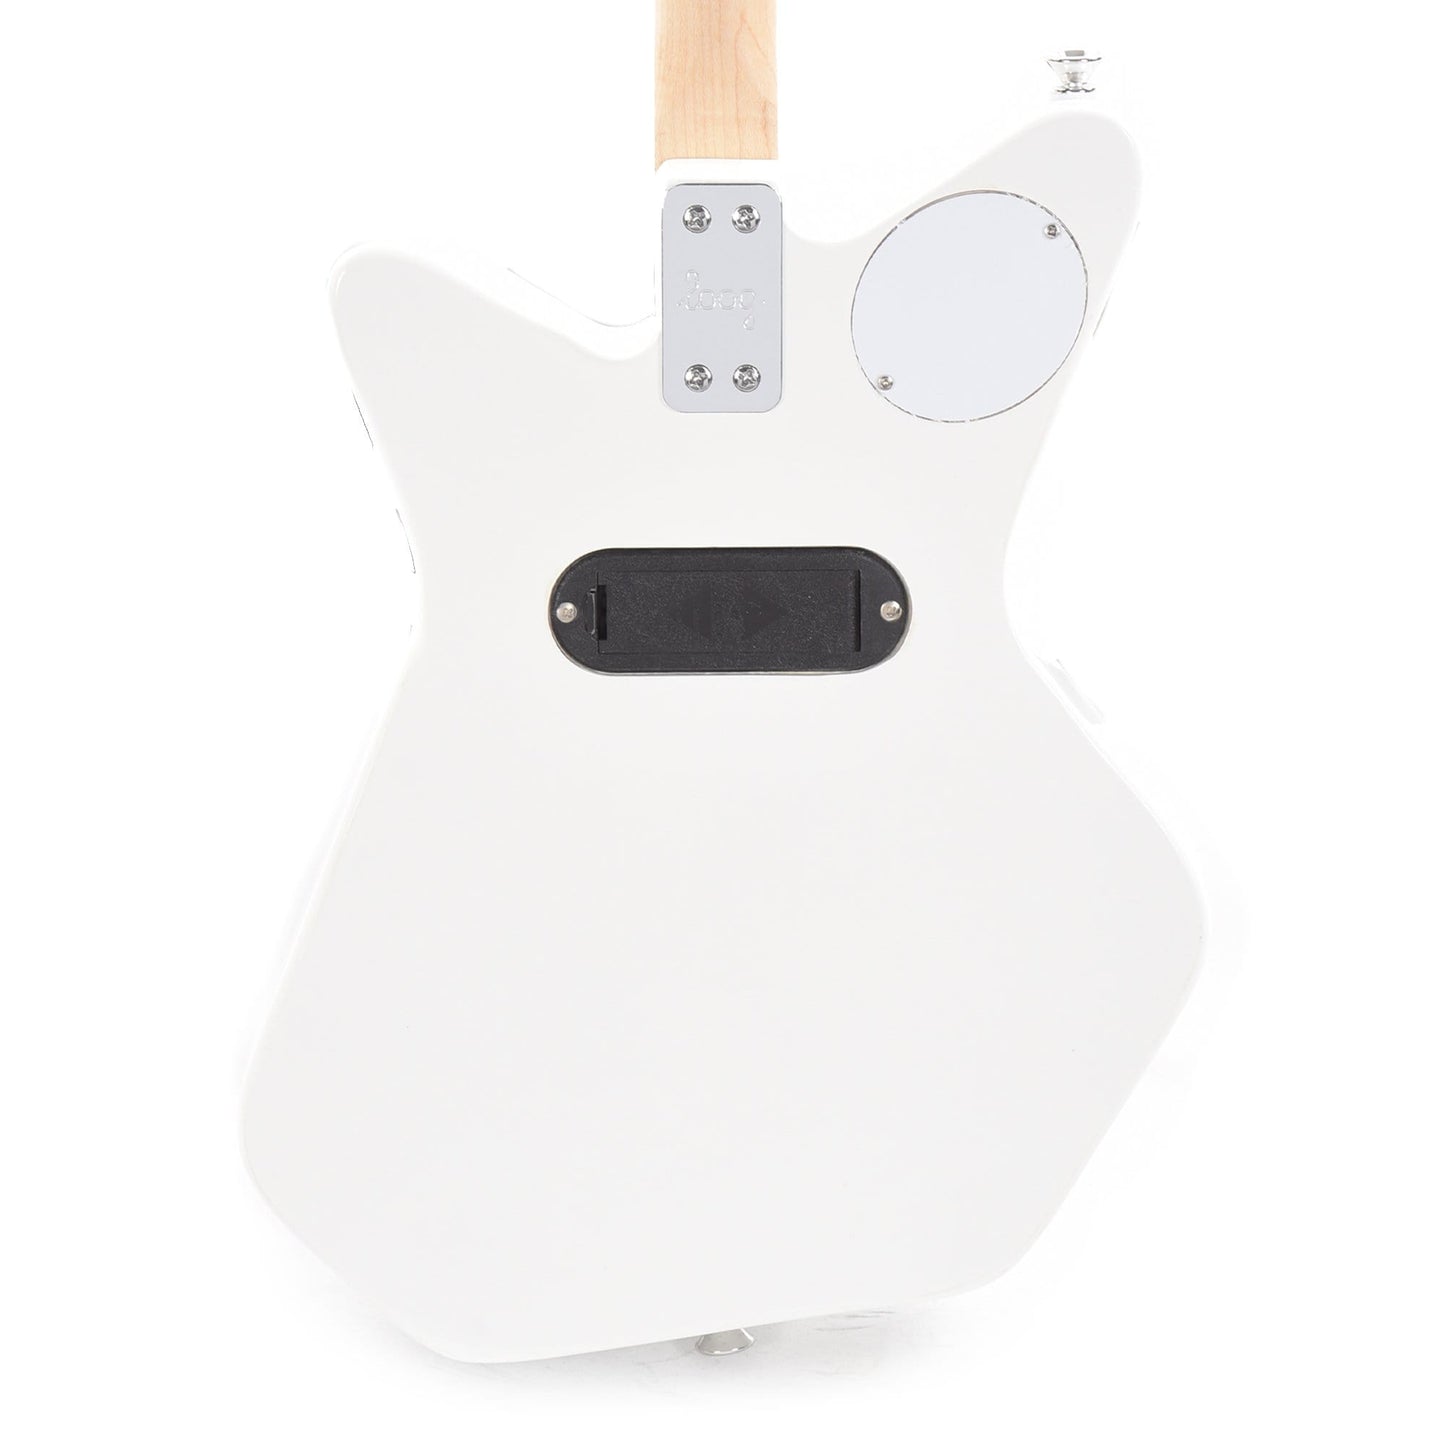 Loog Pro Electric Guitar w/Built-In Amp White Electric Guitars / Travel / Mini